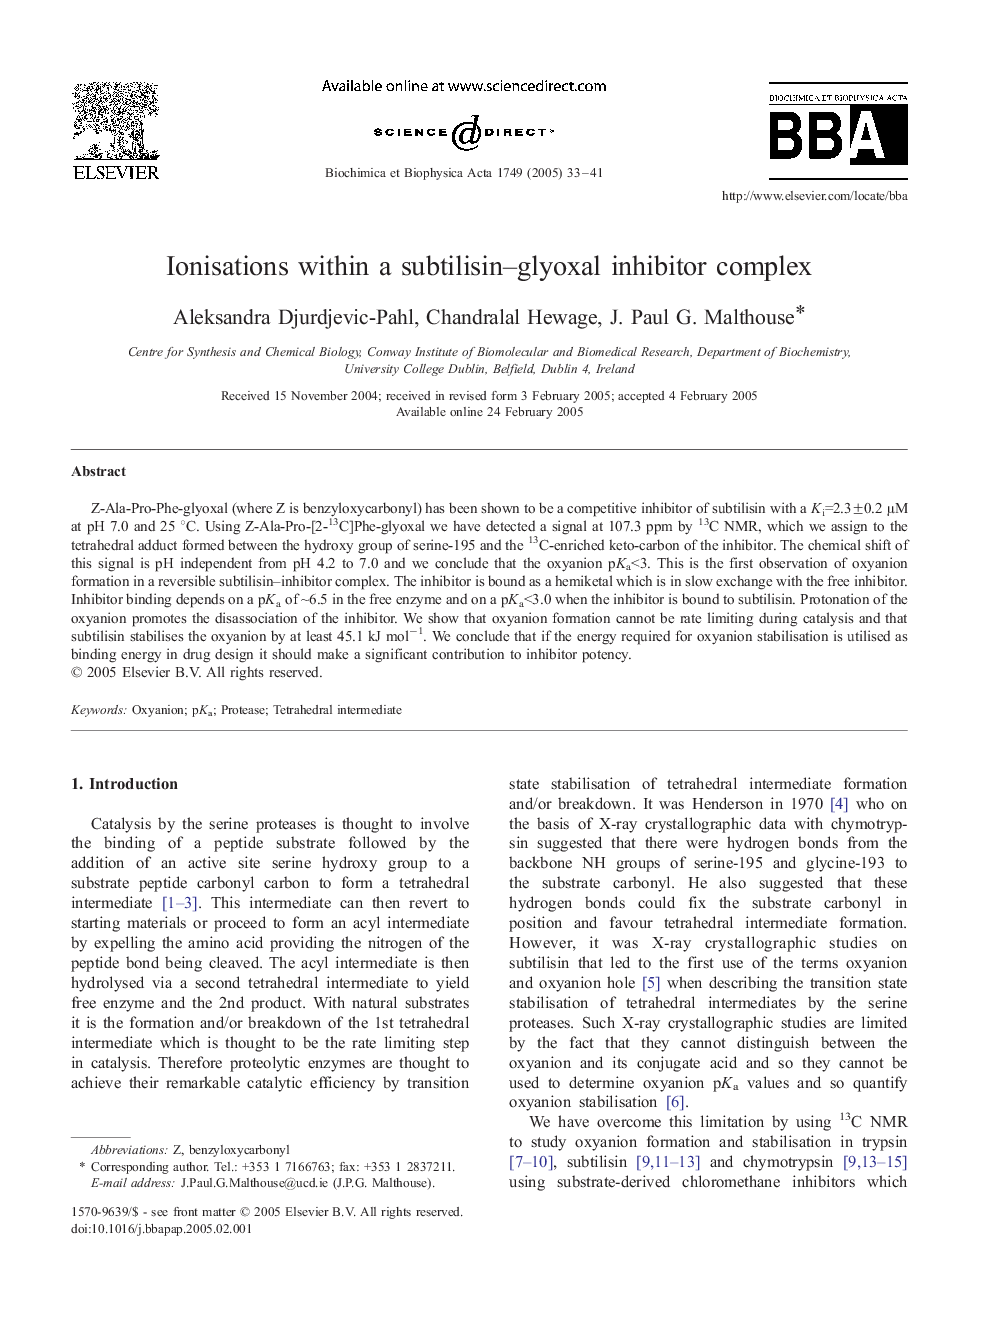 Ionisations within a subtilisin-glyoxal inhibitor complex